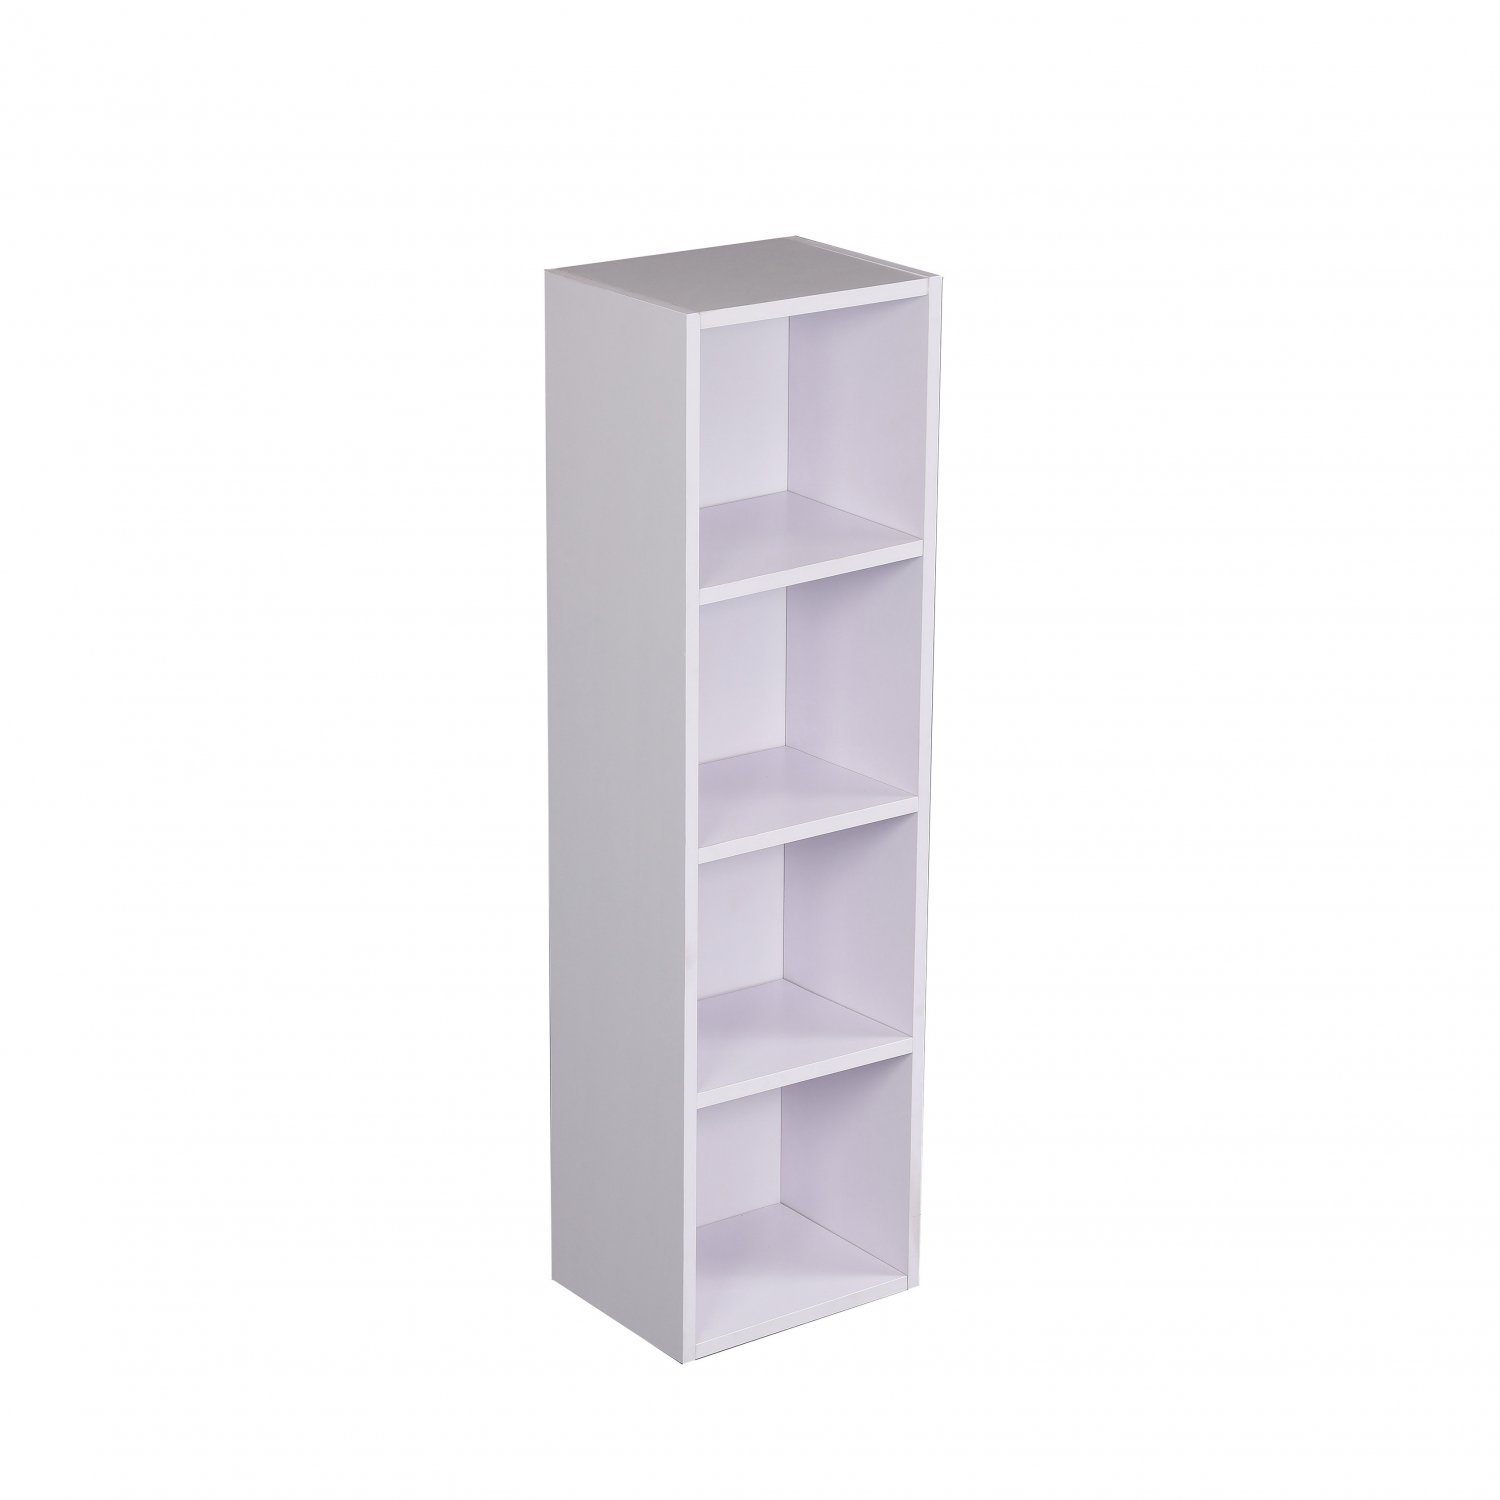 4 Tier Wooden Shelf White Bookcase Shelving Storage Display Rack